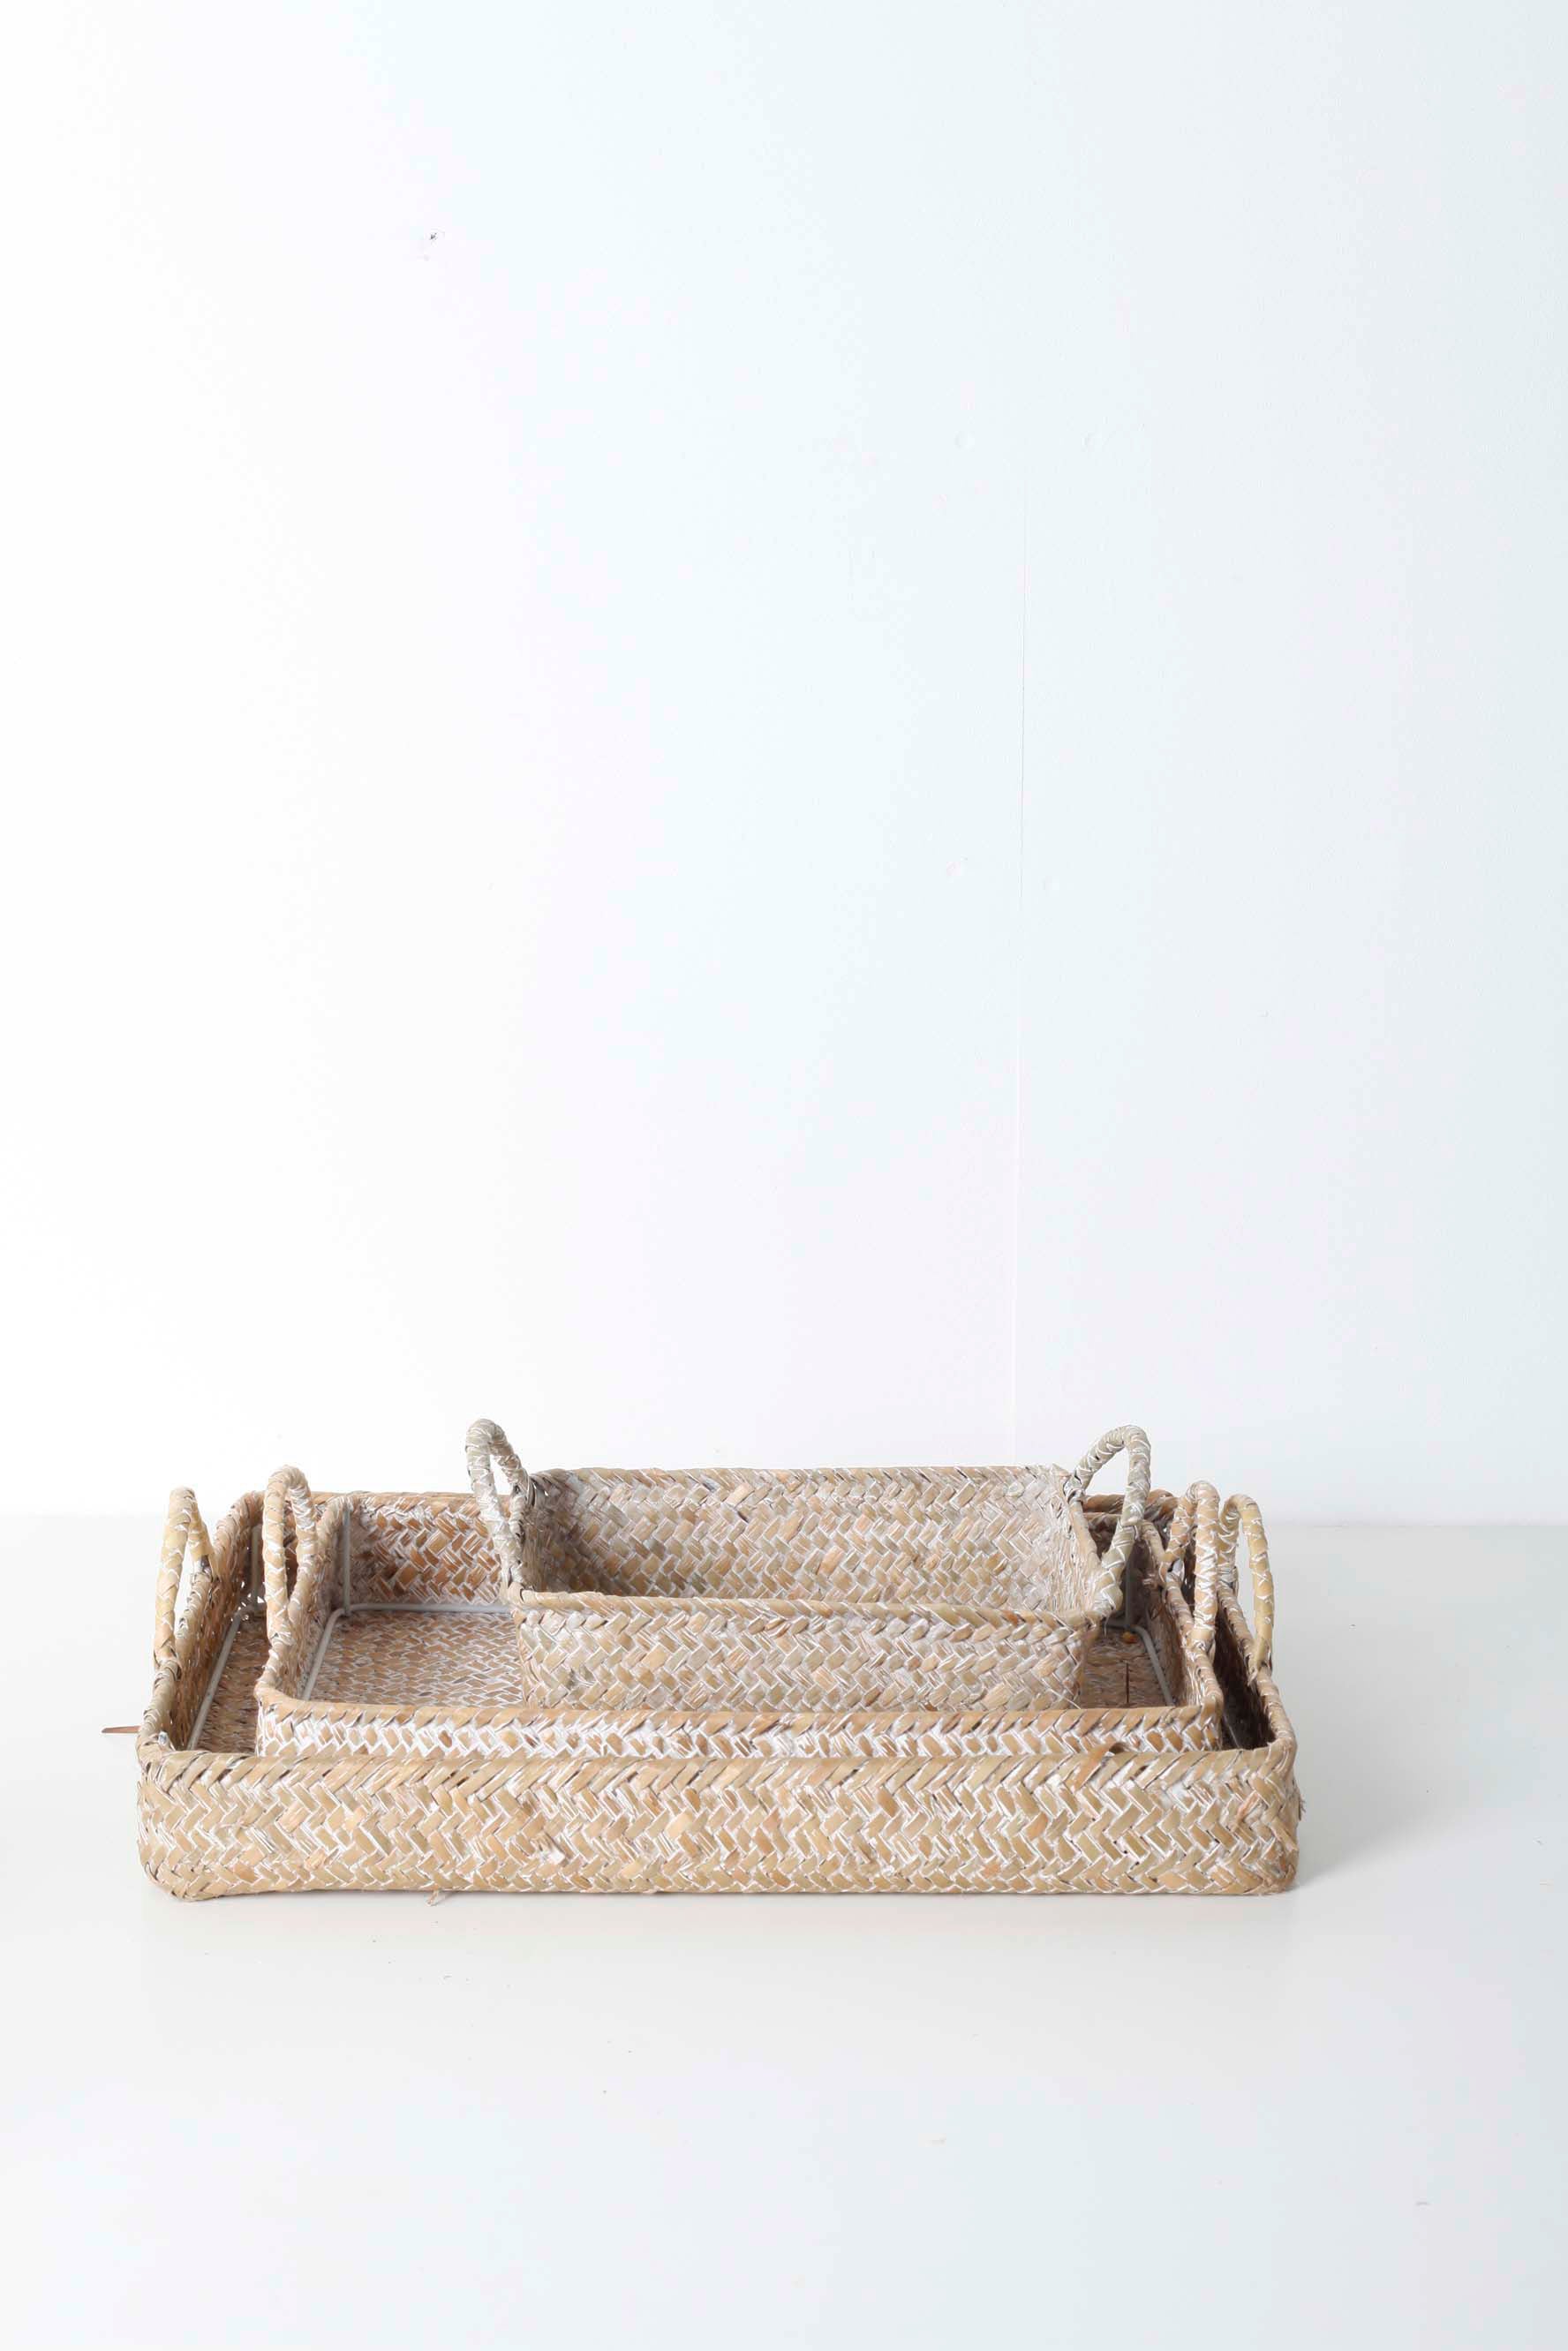 Rattan Tray Baskets - Set of 3